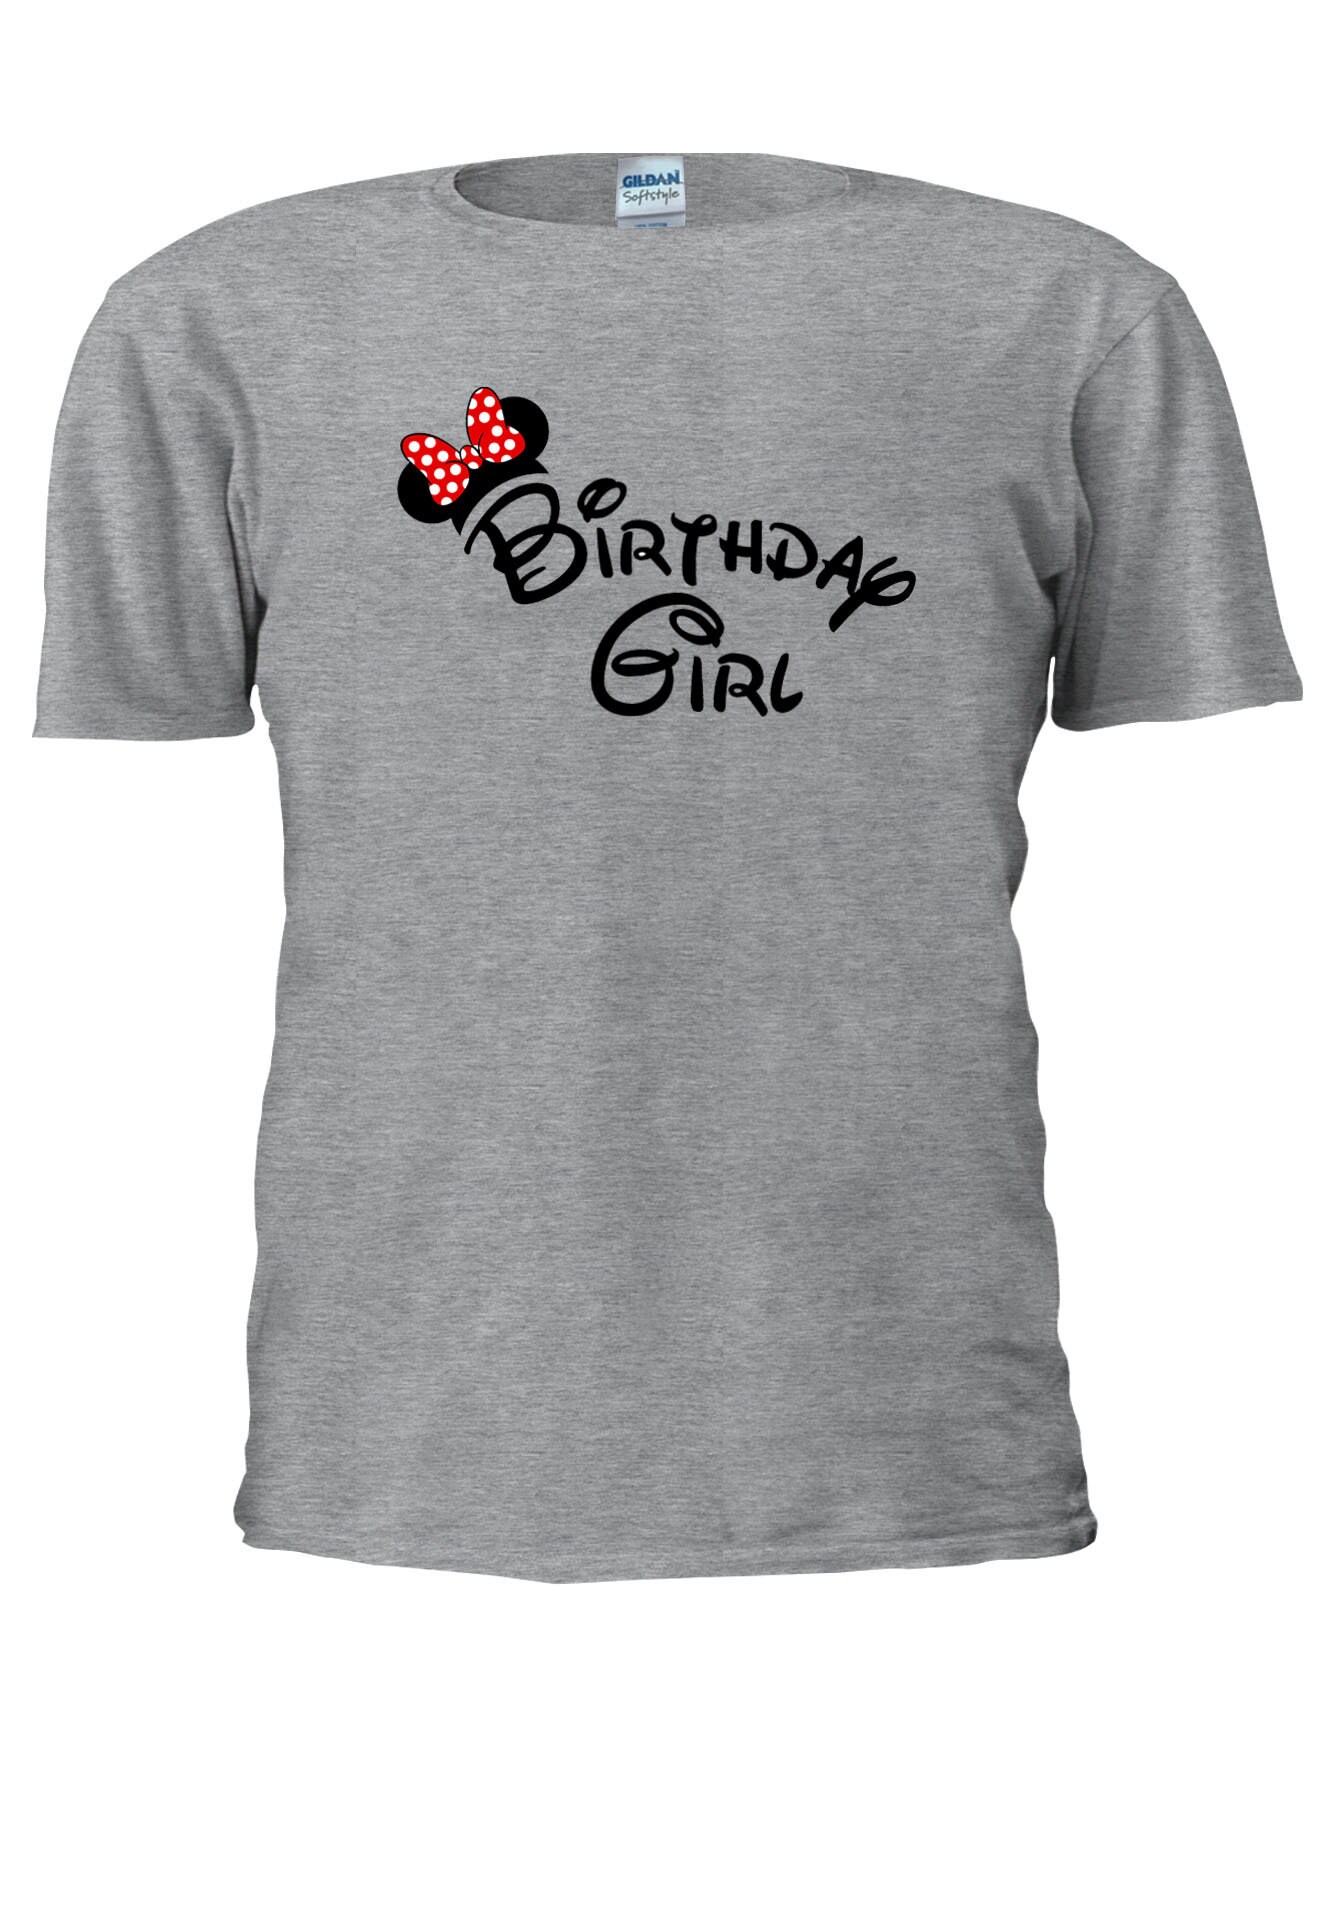 Details about   Disney Minnie Mouse Birthday Girl Ribbon Men Women Unisex T-shirt Vest Top 4243 